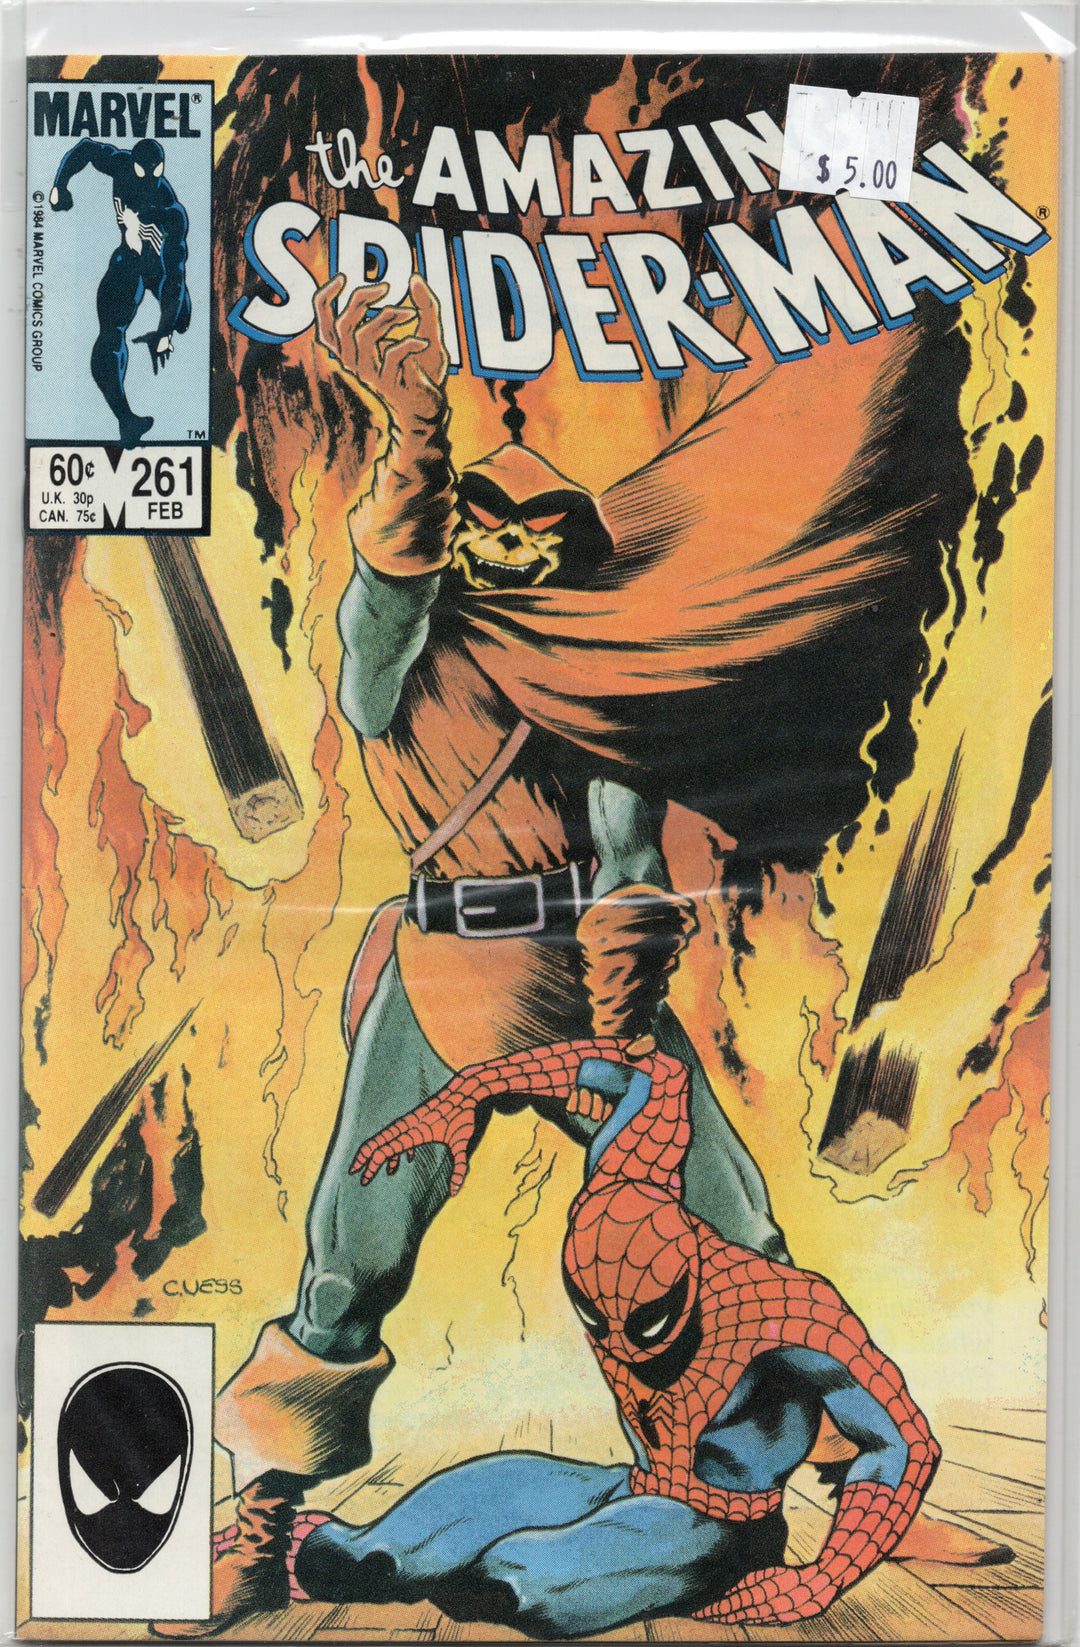 The Amazing Spider Man #261